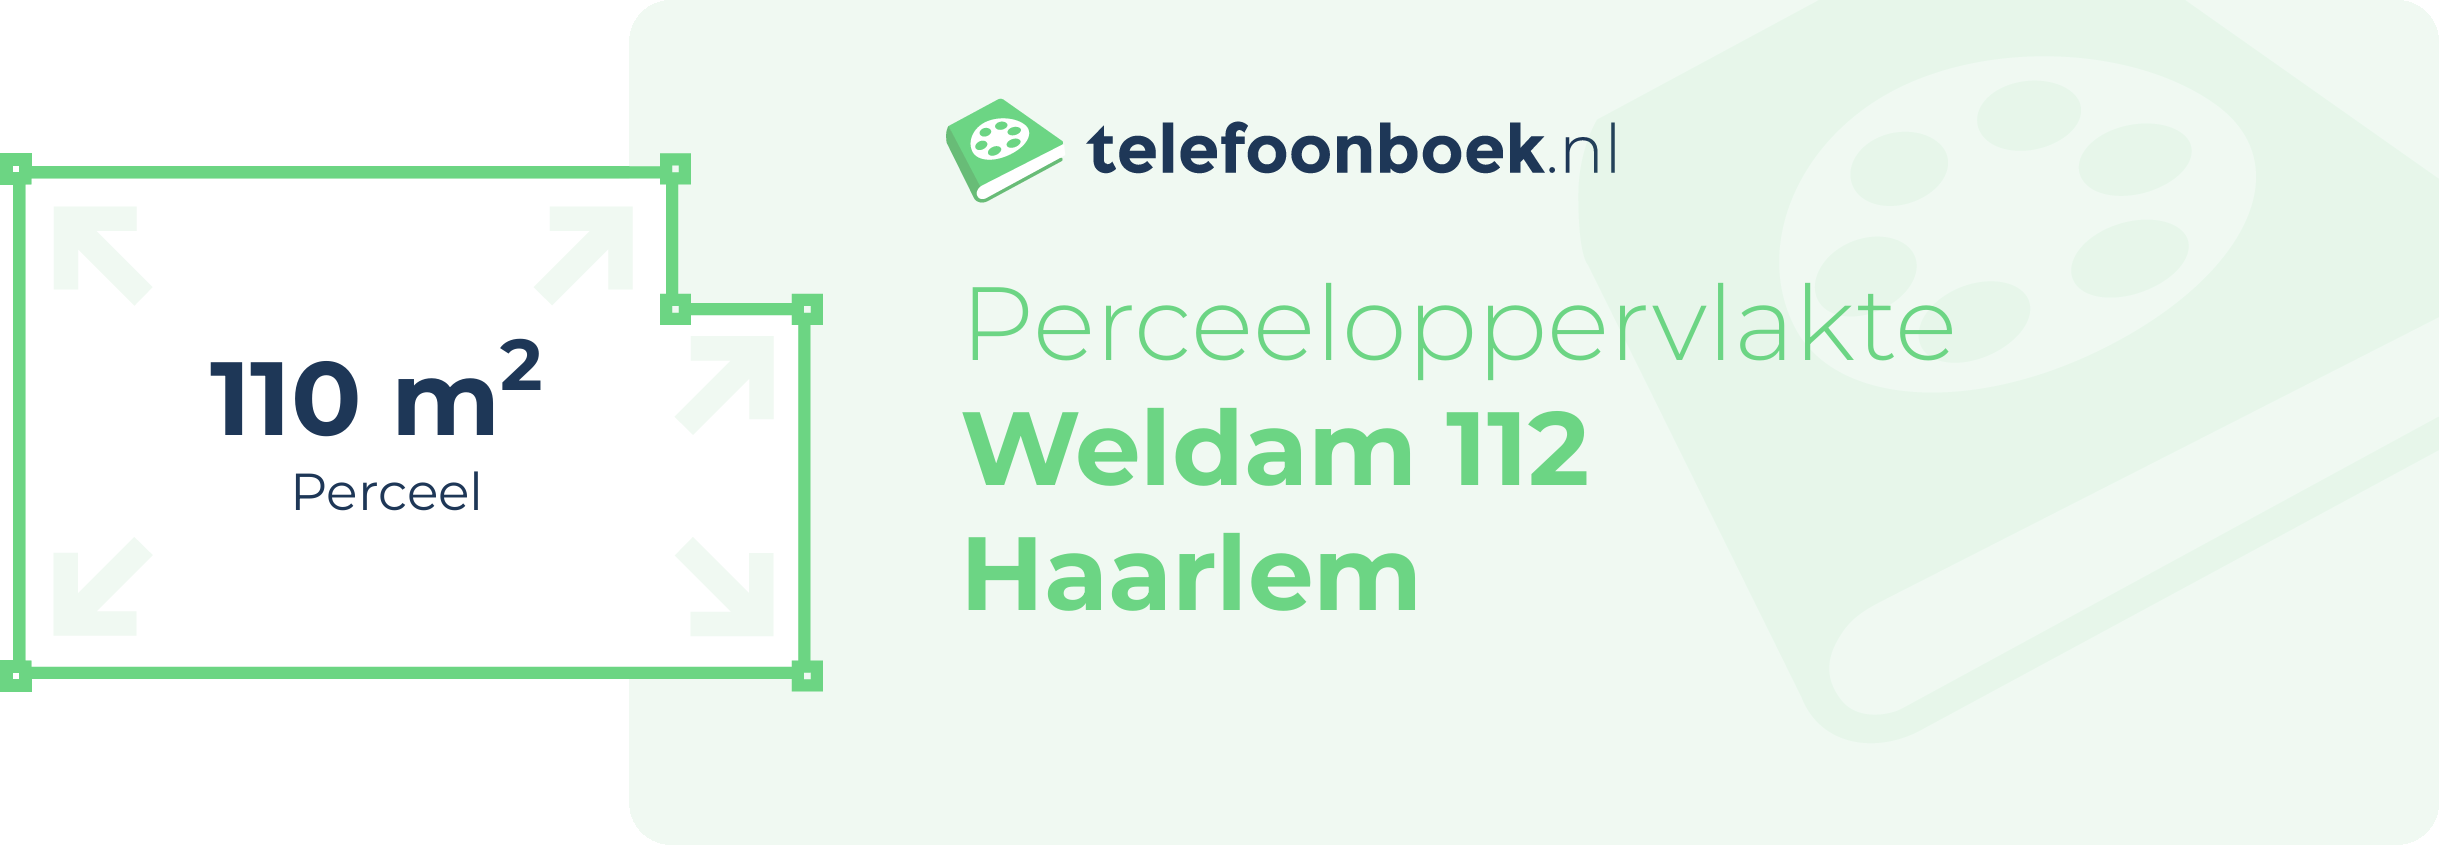 Perceeloppervlakte Weldam 112 Haarlem